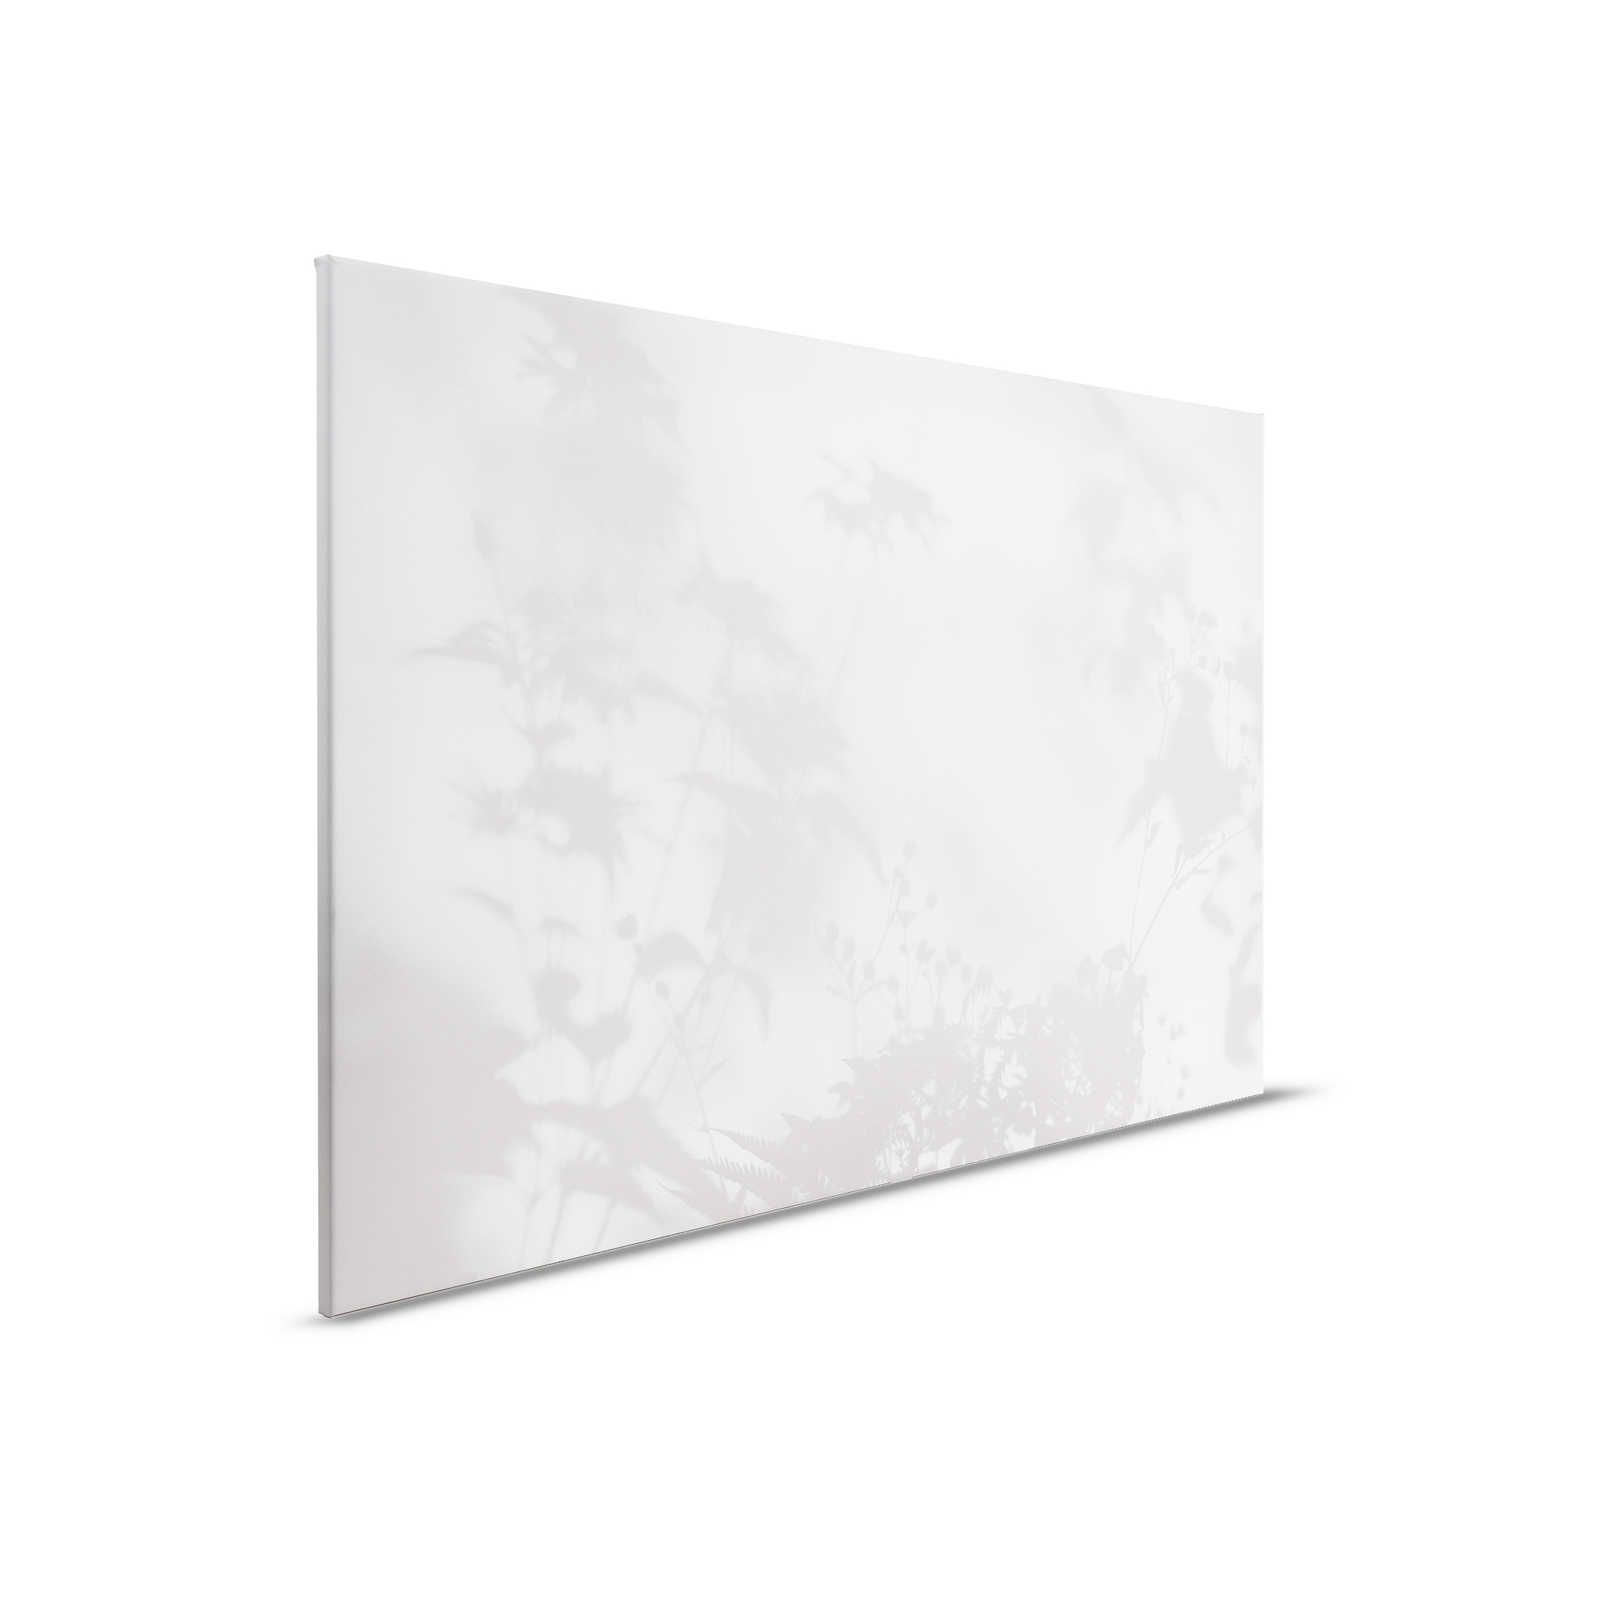 Shadow Room 2 - Natur Leinwandbild Grau & Weiß, verblasstes Design – 0,90 m x 0,60 m
